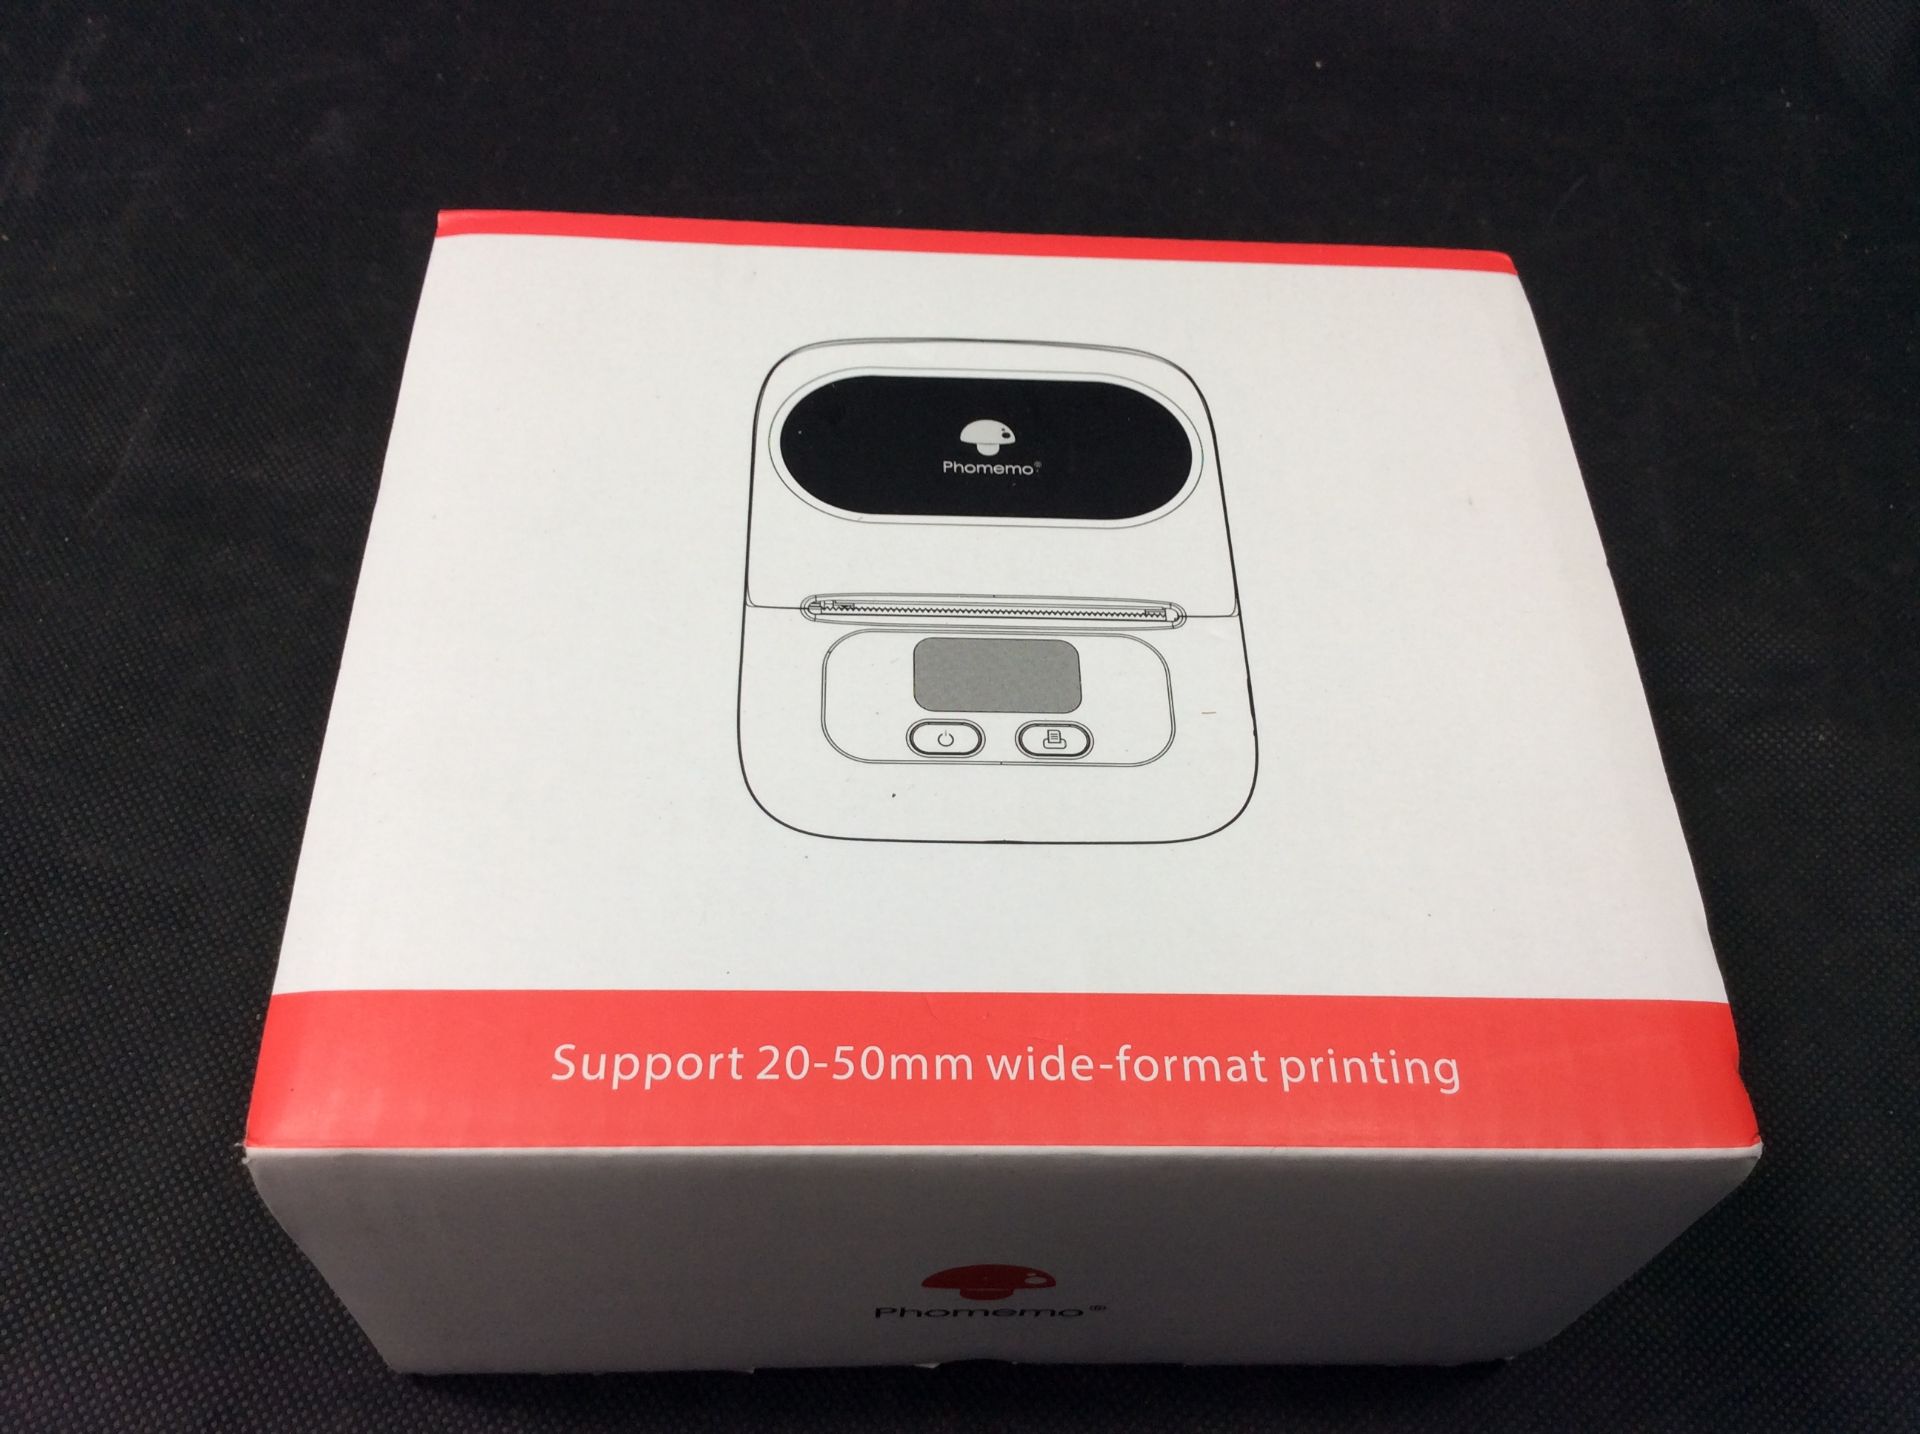 Phomemo Smart Label Printer M110